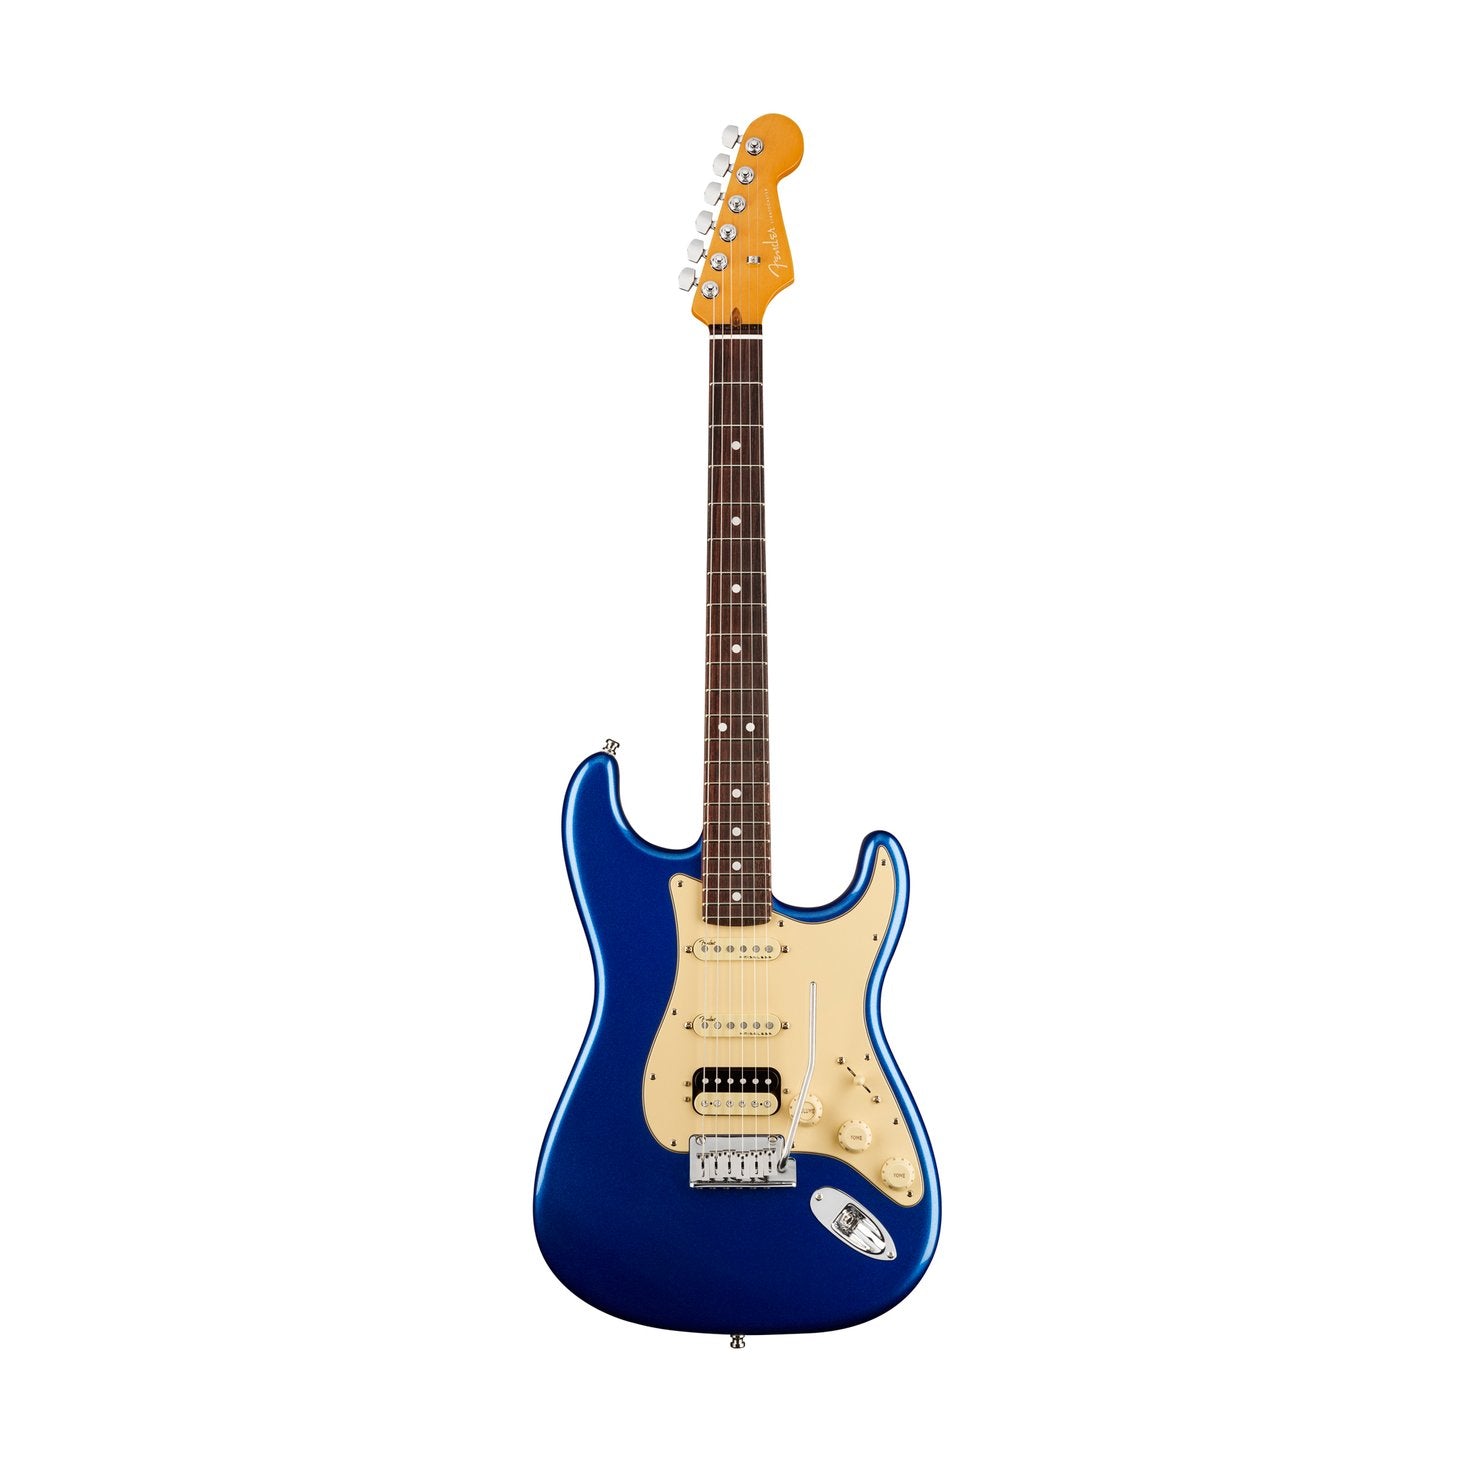 Fender American Ultra HSS Stratocaster Electric Guitar, RW FB, Cobra Blue, FENDER, ELECTRIC GUITAR, fender-electric-guitar-f03-011-8020-795, ZOSO MUSIC SDN BHD